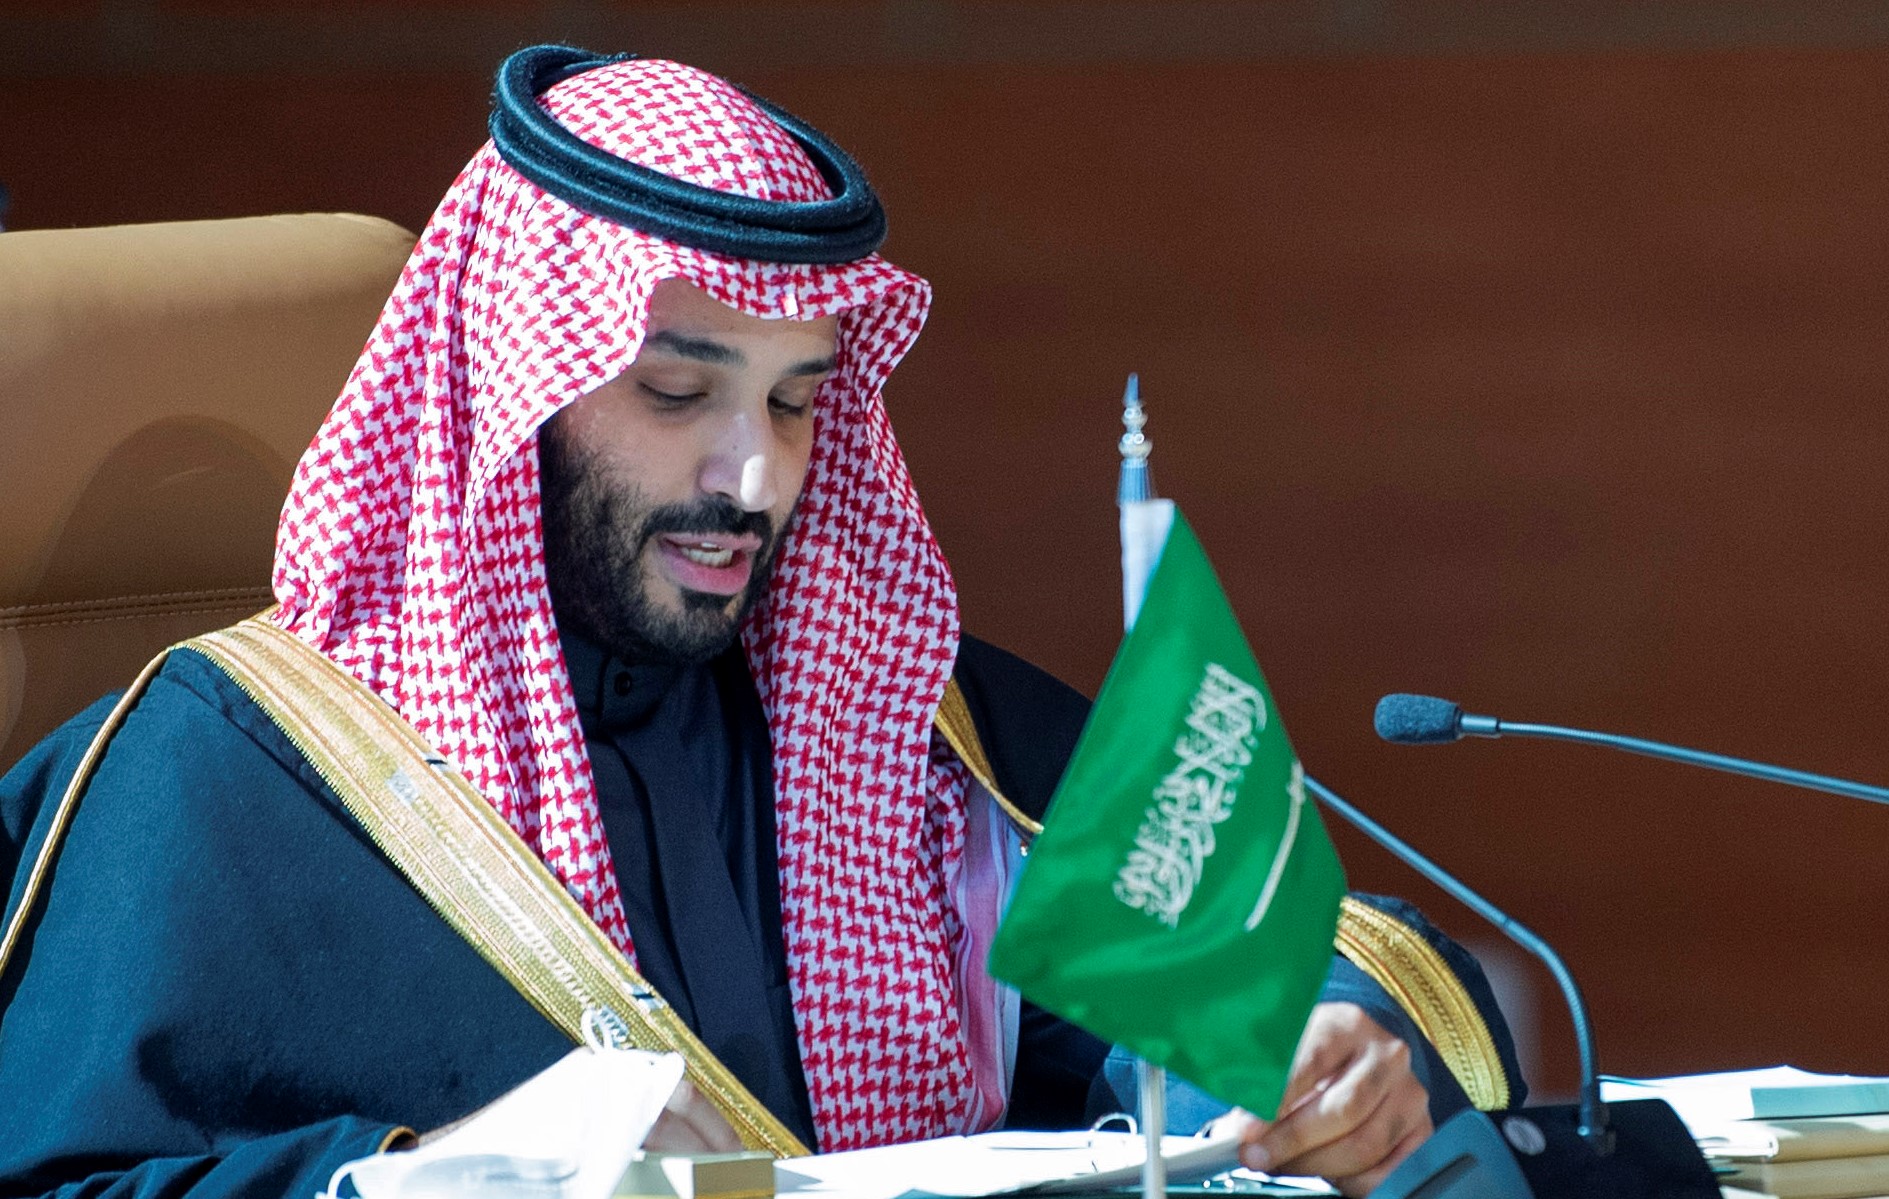 Принцы аль сауды. Принц Салман Саудовская Аравия. Мухаммед Бен Аль Сауд. Принц Саудовской Аравии Мухаммед. Наследный принц Мухаммед Бин Салман.